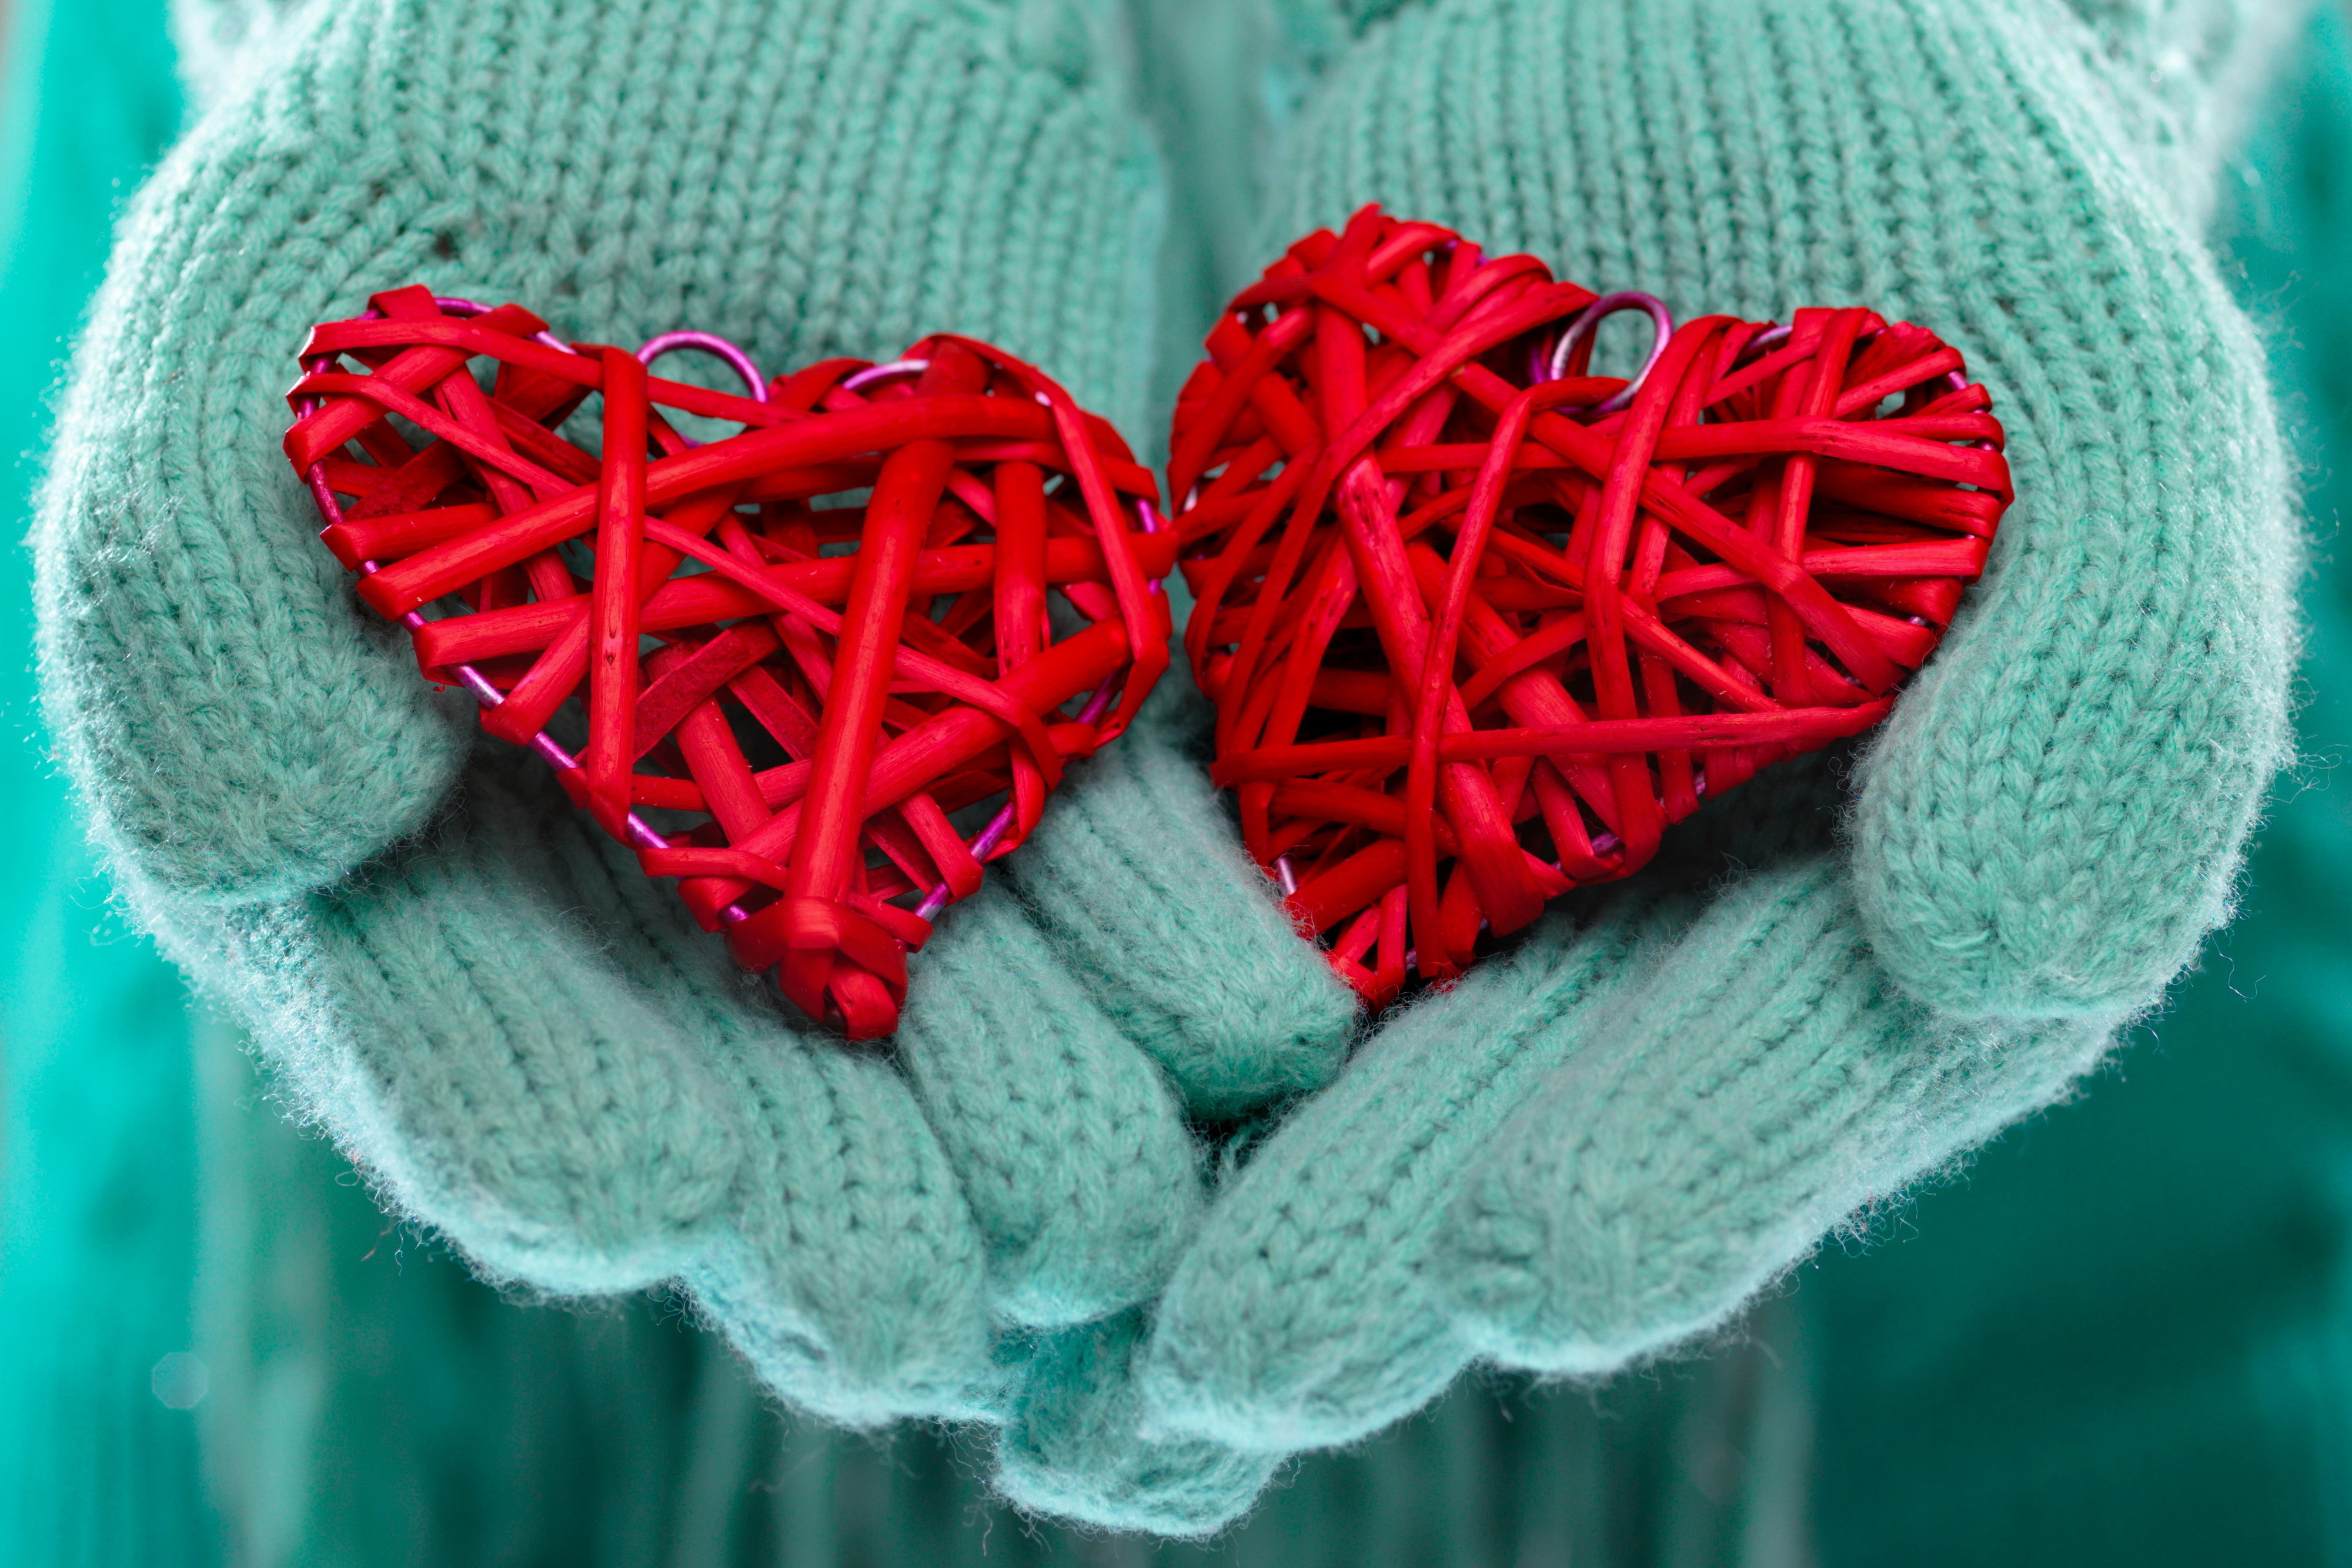 Download Wallpaper heart decoration valentine's day hand st. valentines, 4000x Wicker hearts in hands